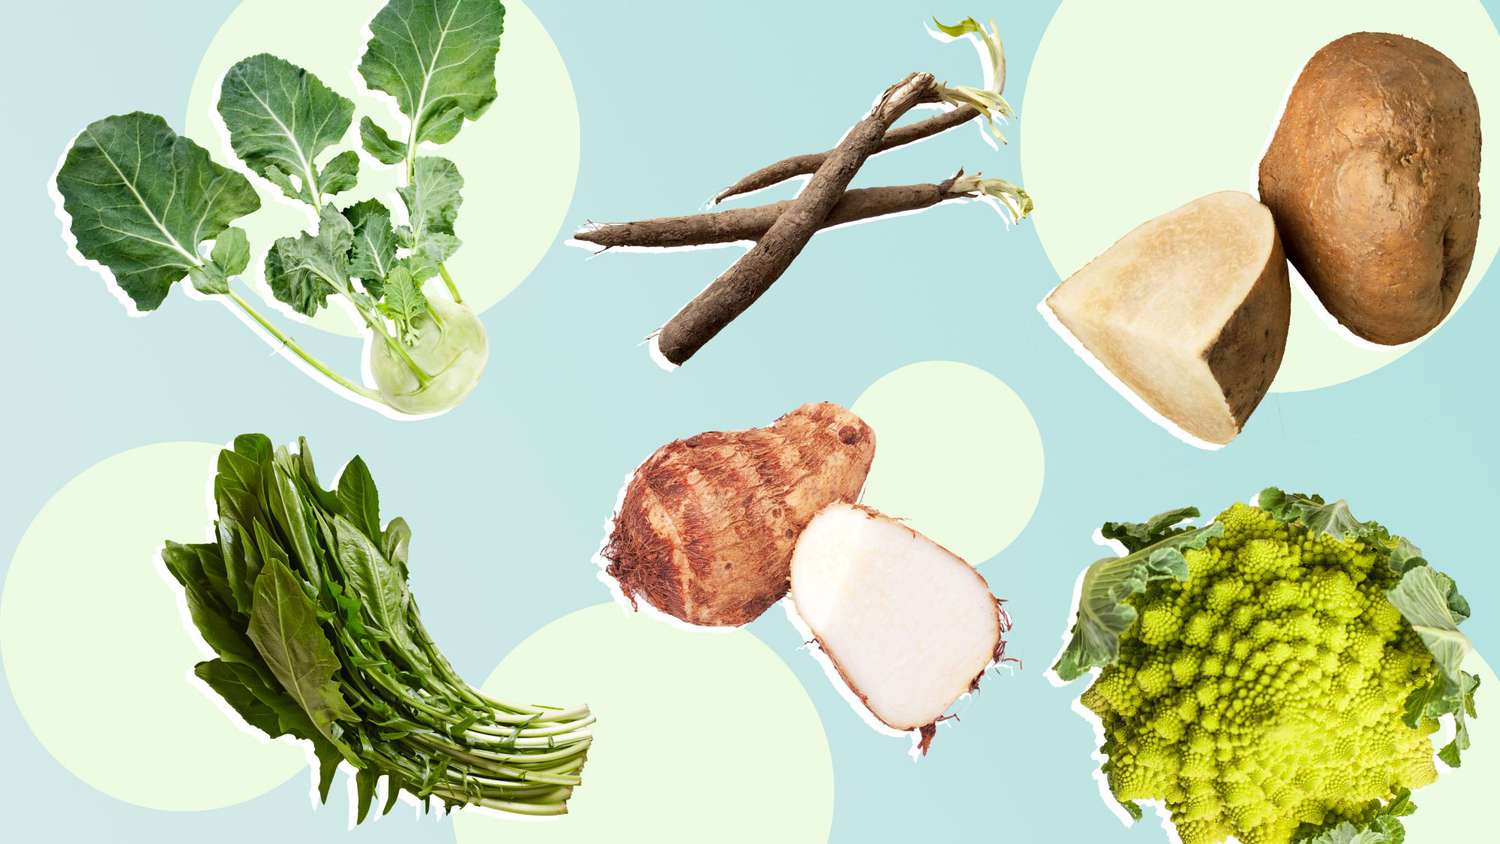 Collage of vegetables including Kohlrabi, salsify, jicama, romanesco, taro, and dandelion greens